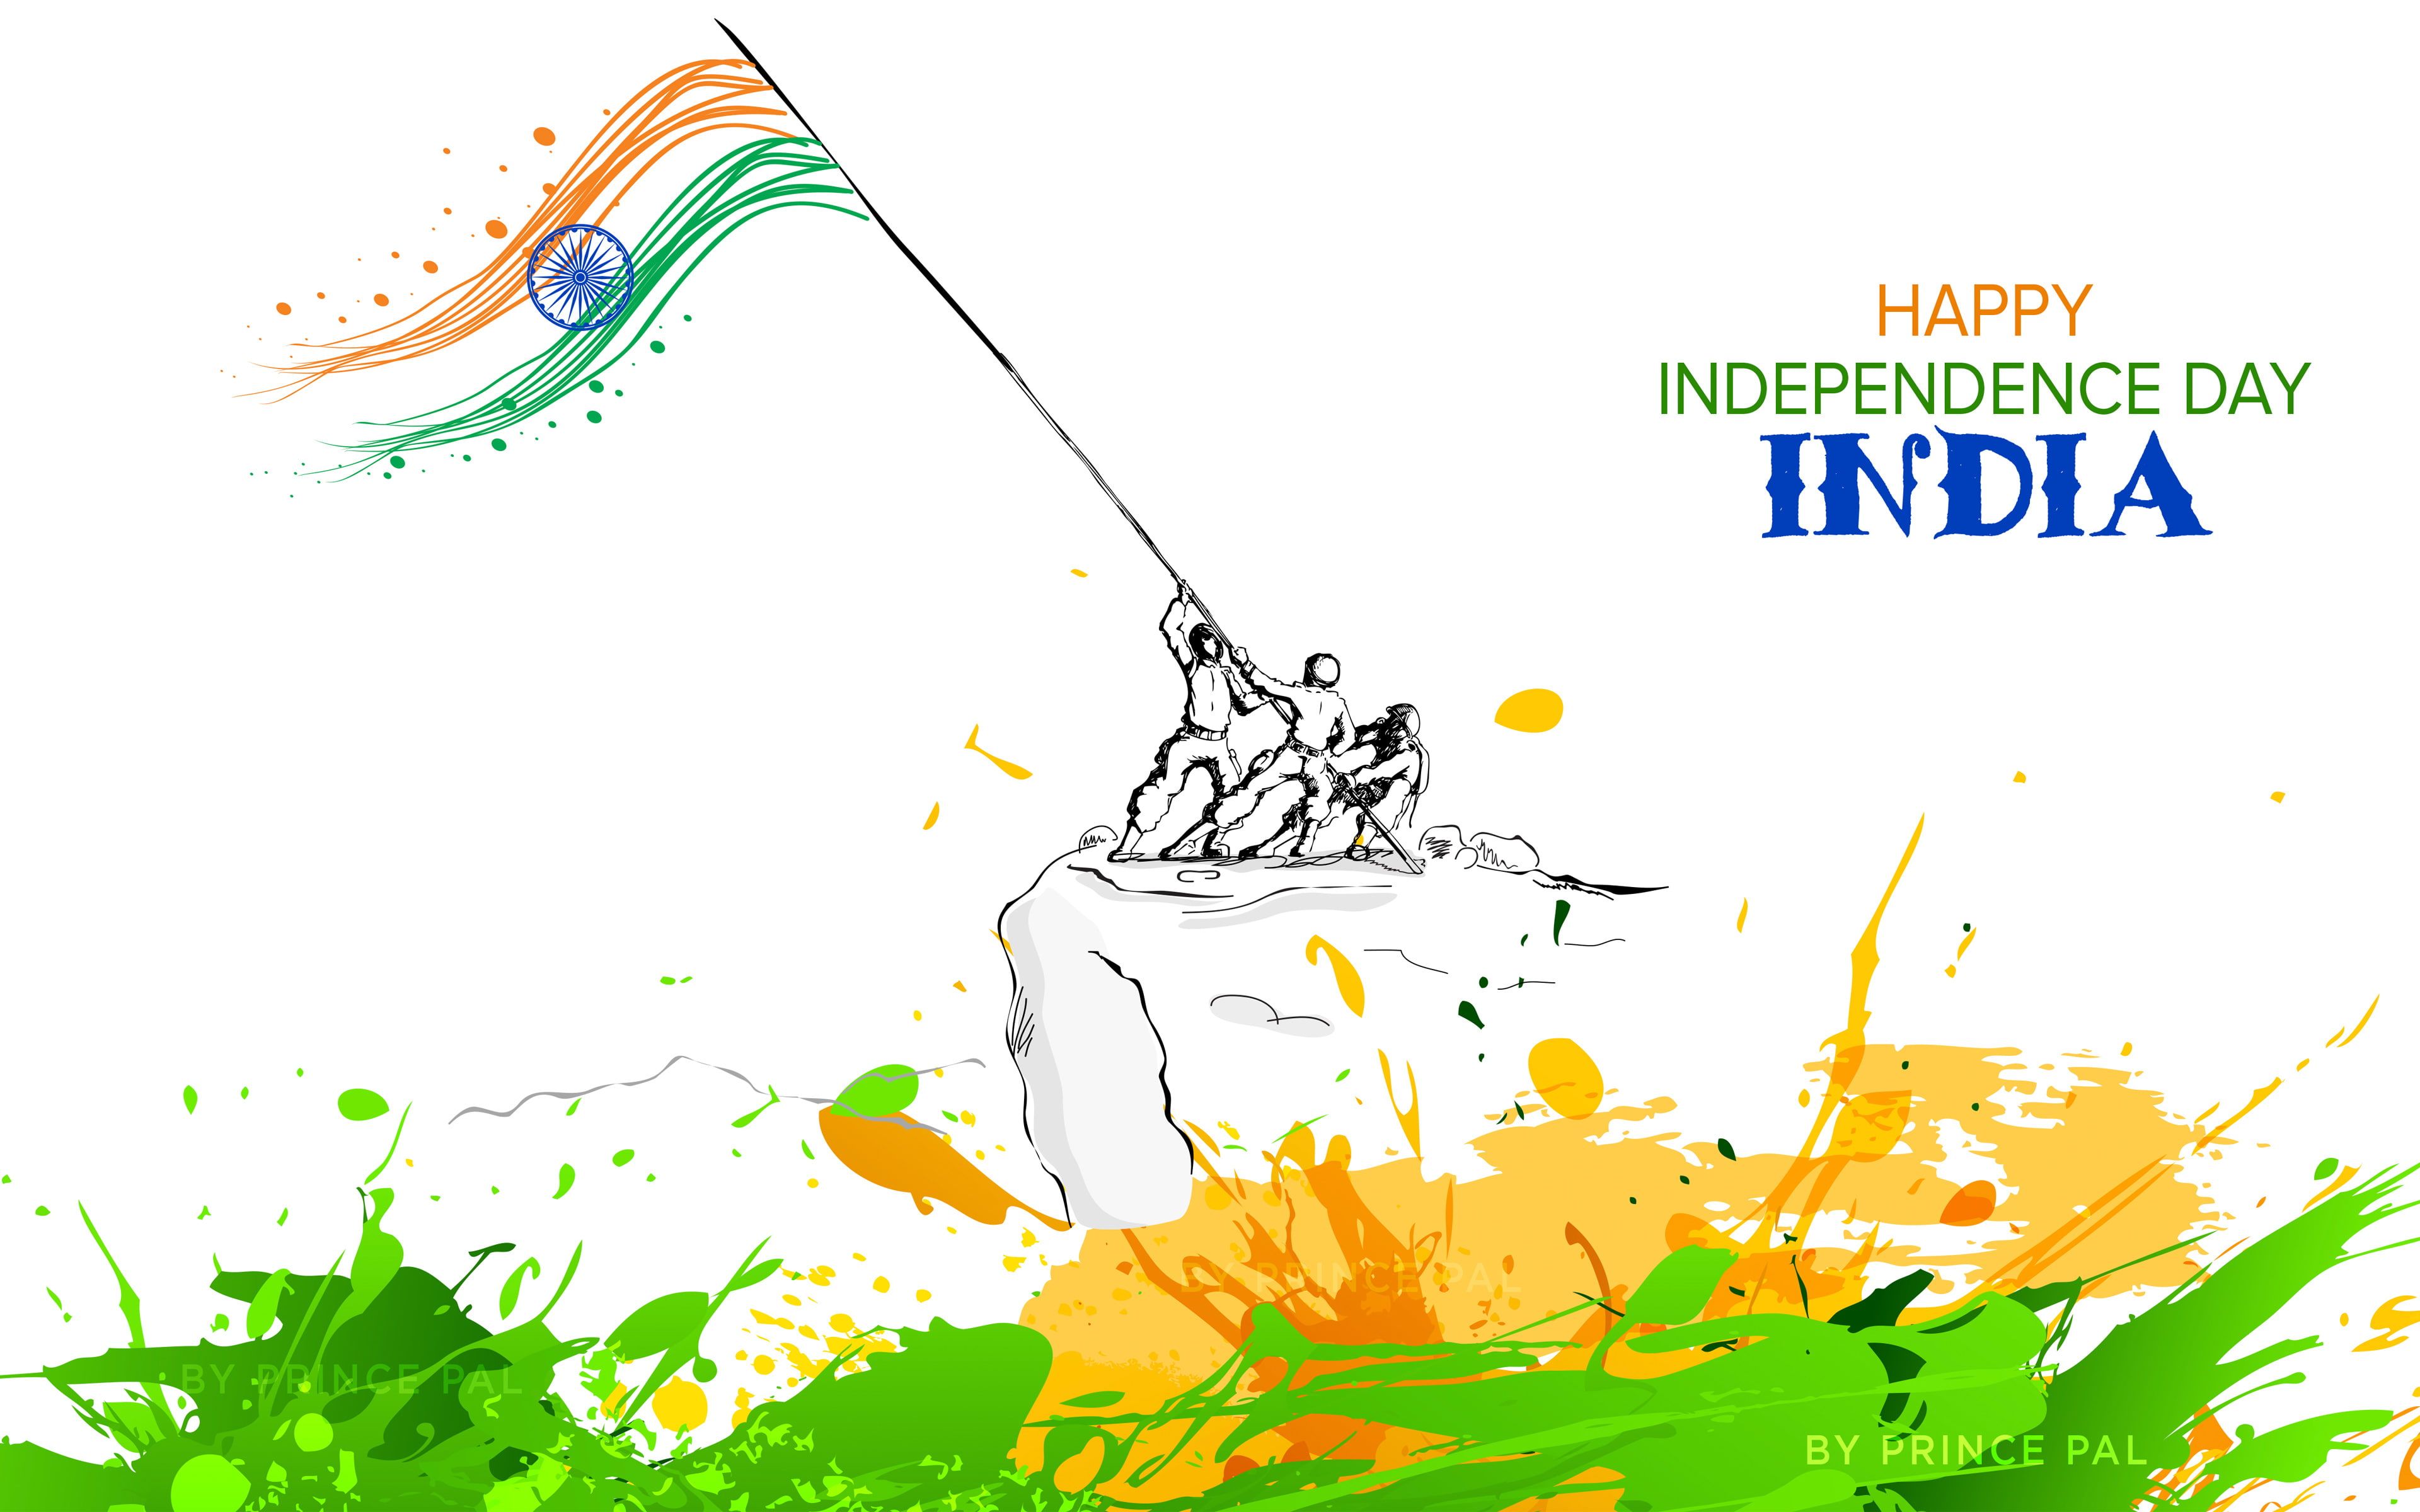 Happy Independence Day India 5K #India #Happy #Independence #Day K # wallpaper #hd. Happy independence day india, Independence day india, Independence day image